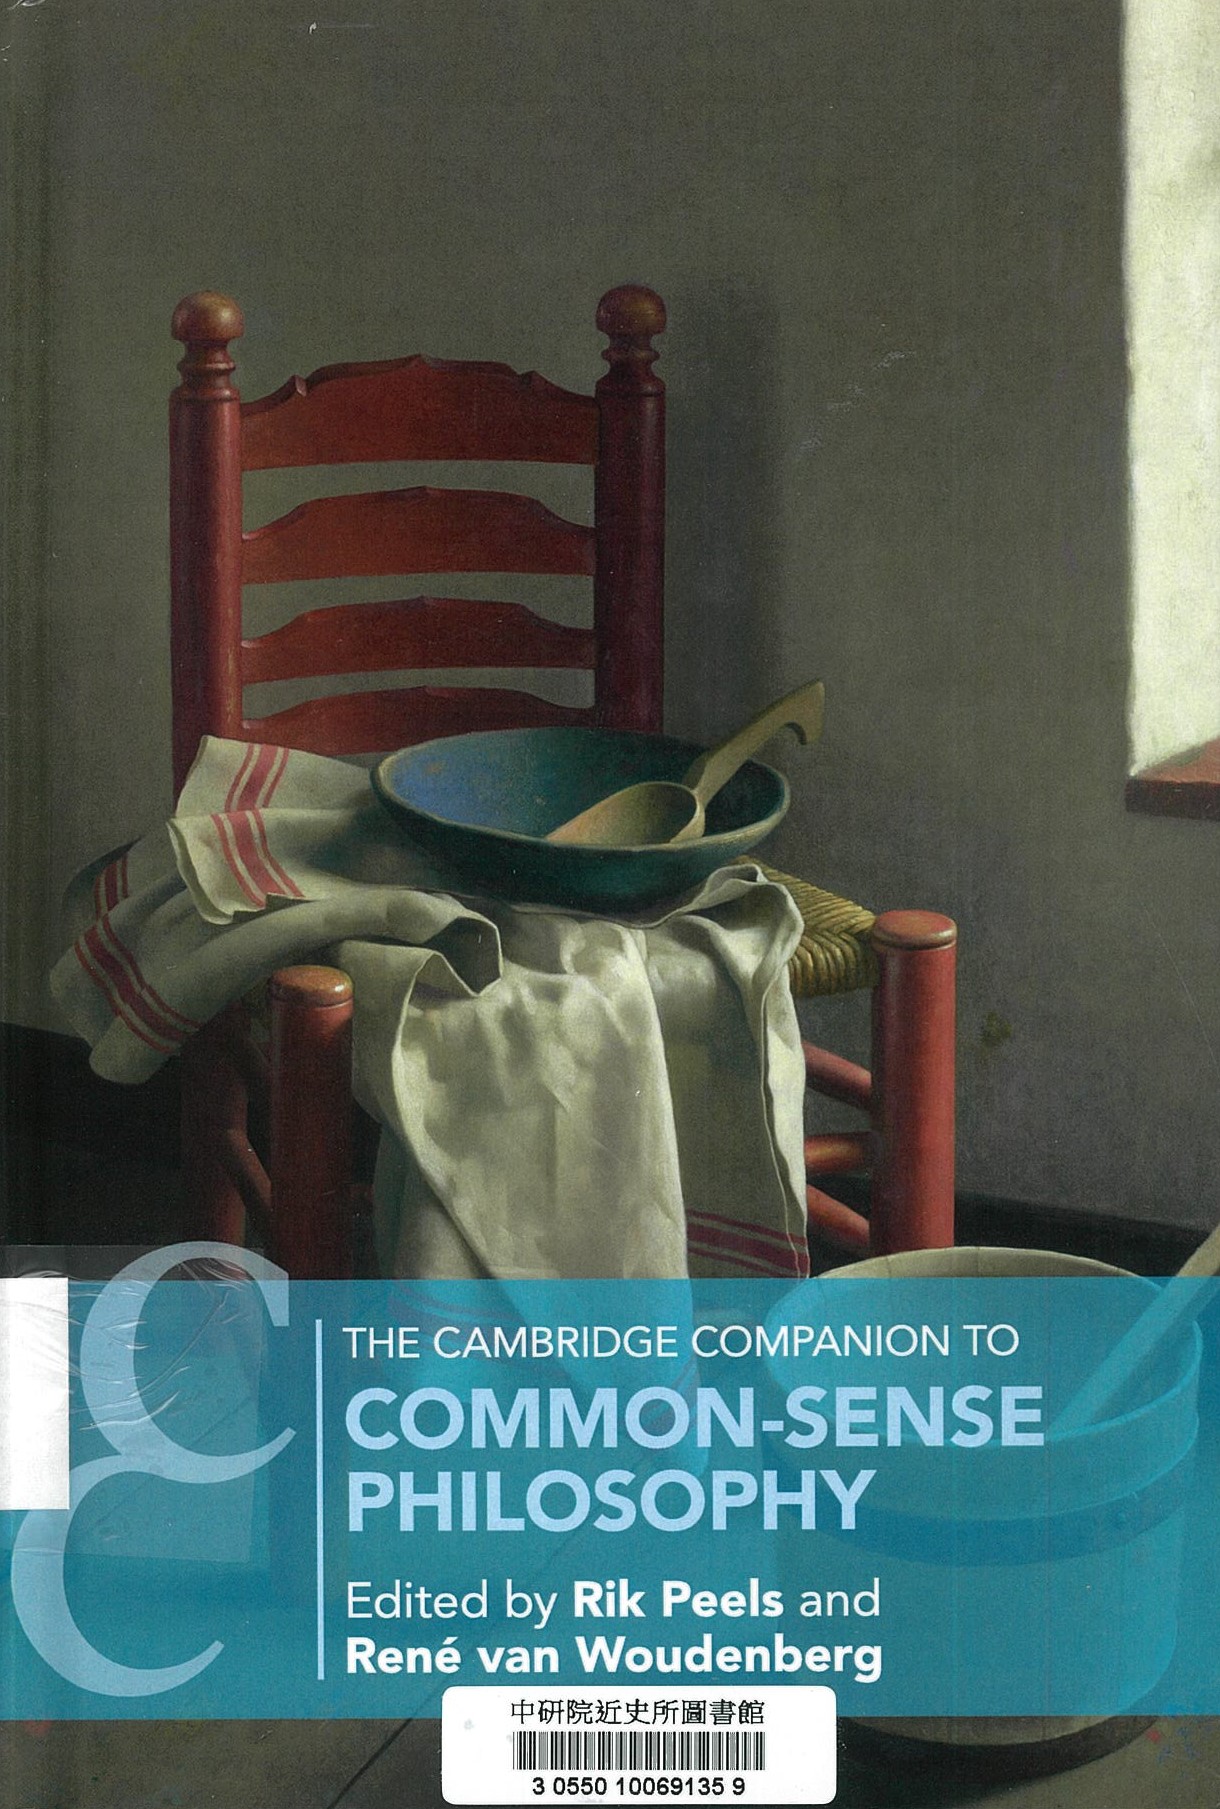 The Cambridge companion to common-sense philosophy